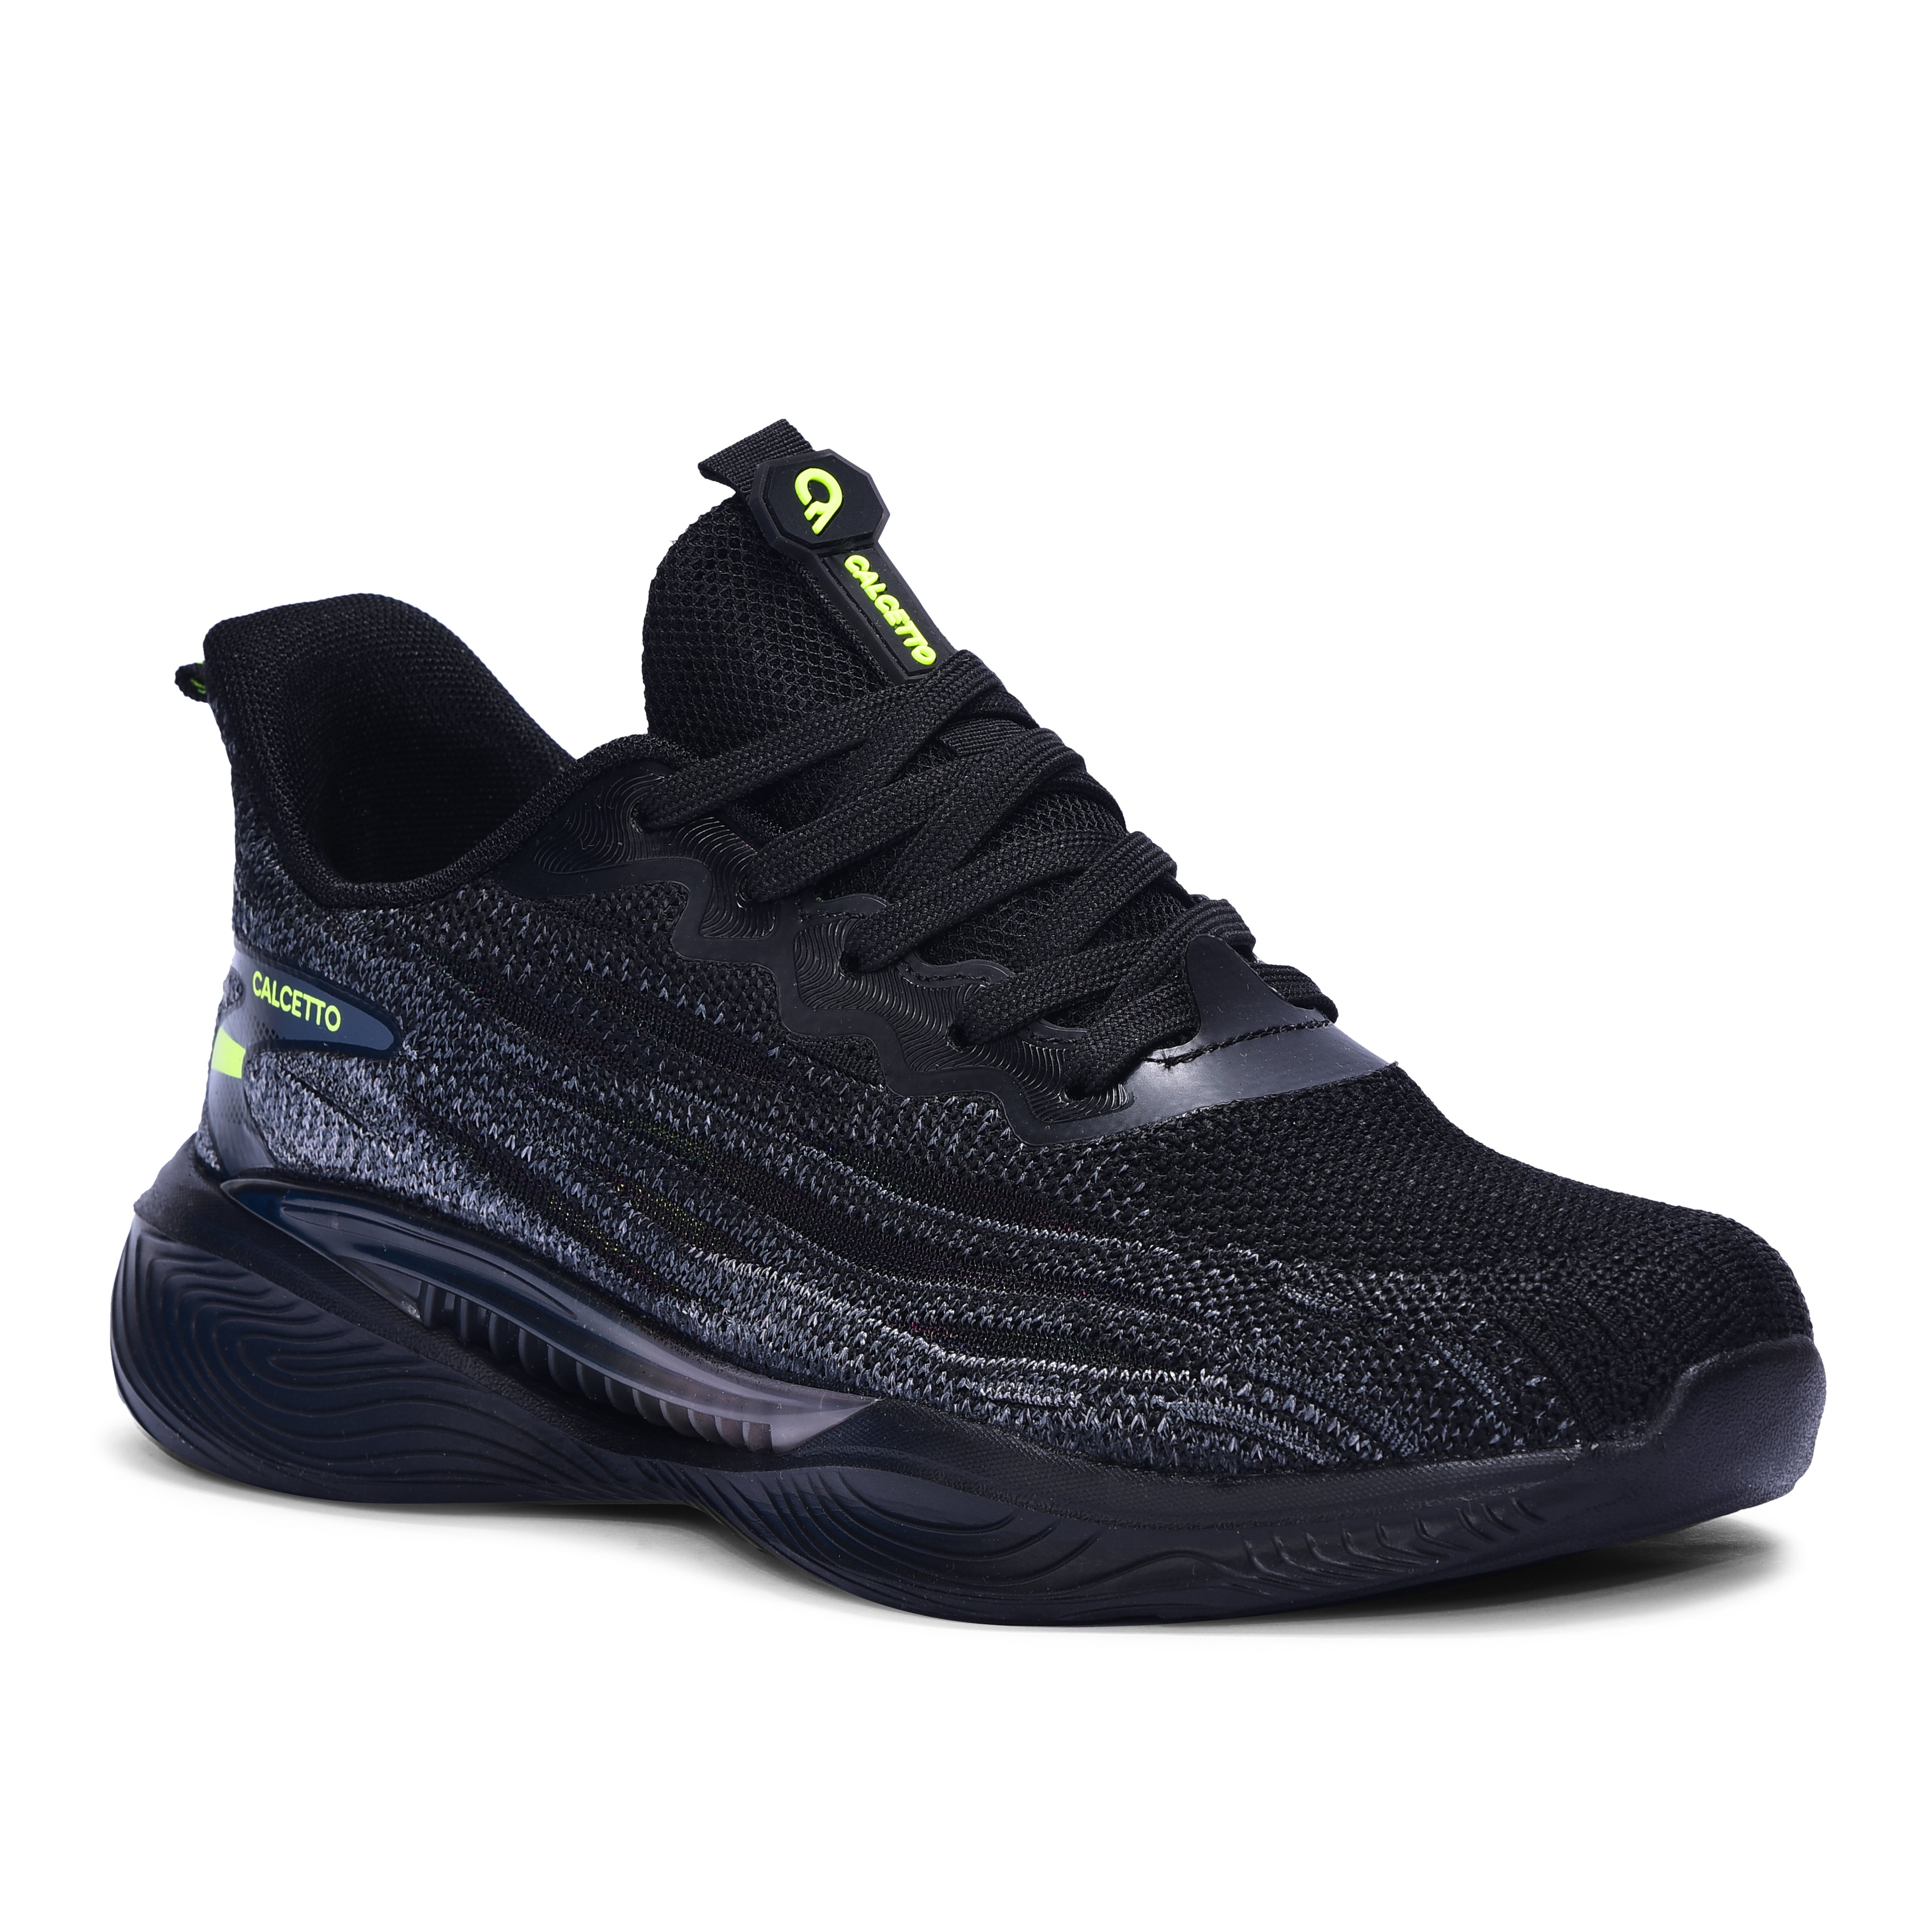 Calcetto CLT-1001 Black Lime Casual Shoe For Men